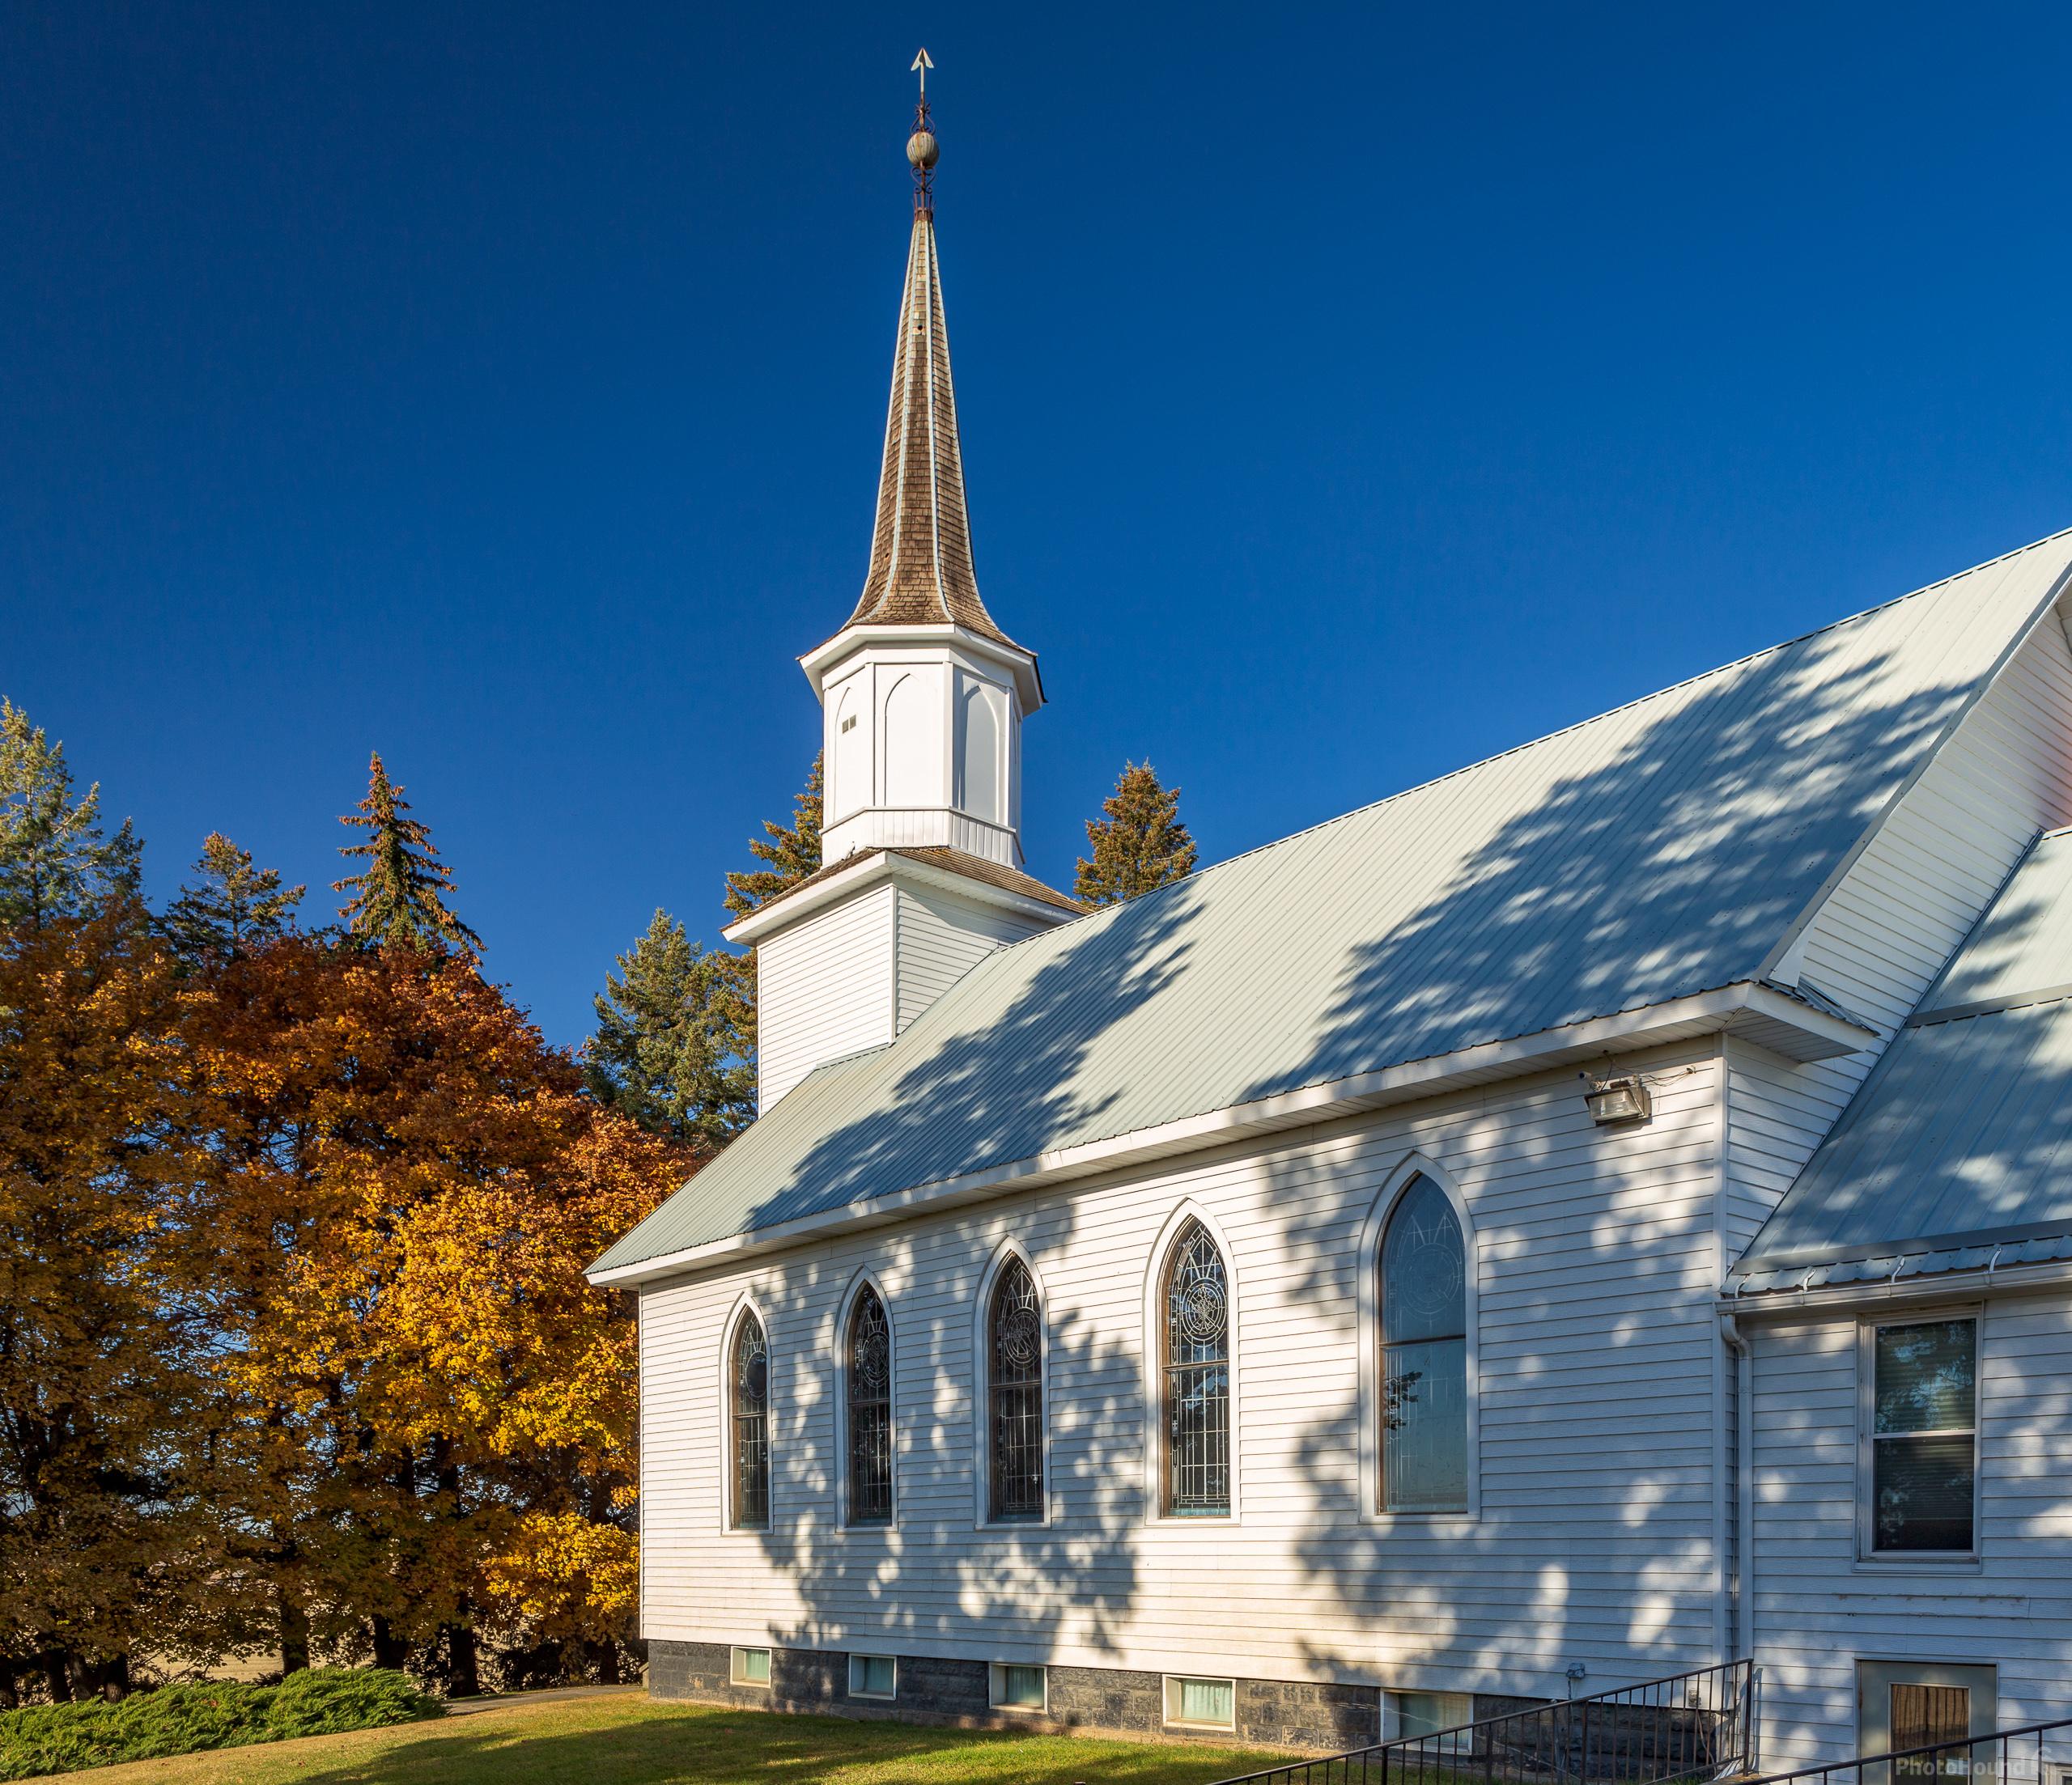 Image of Genesee Valley Lutheran Church by Joe Becker